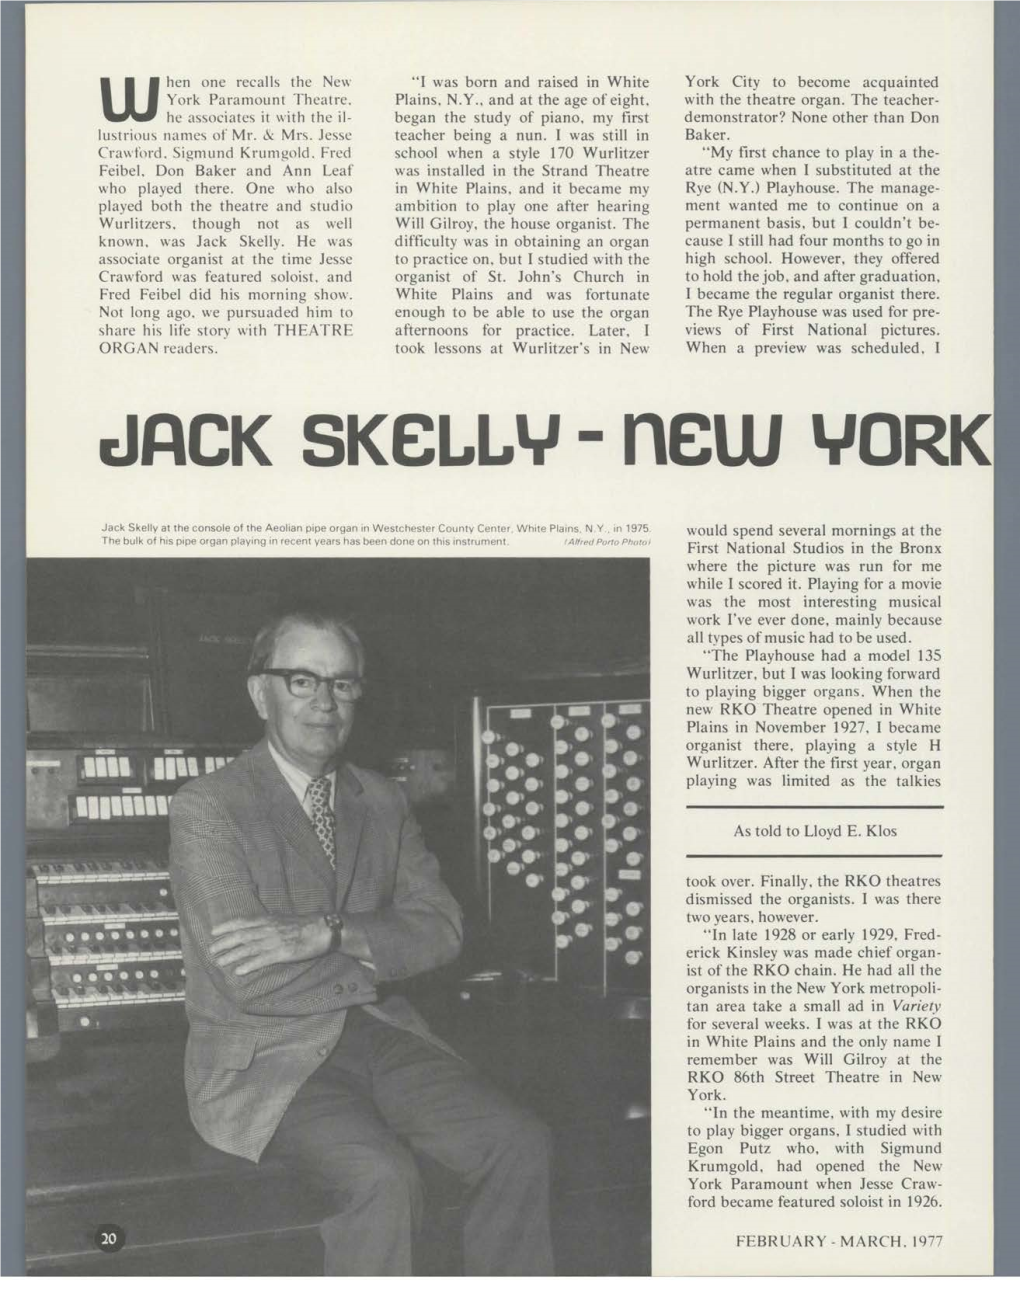 Dack Skelly - New YORK